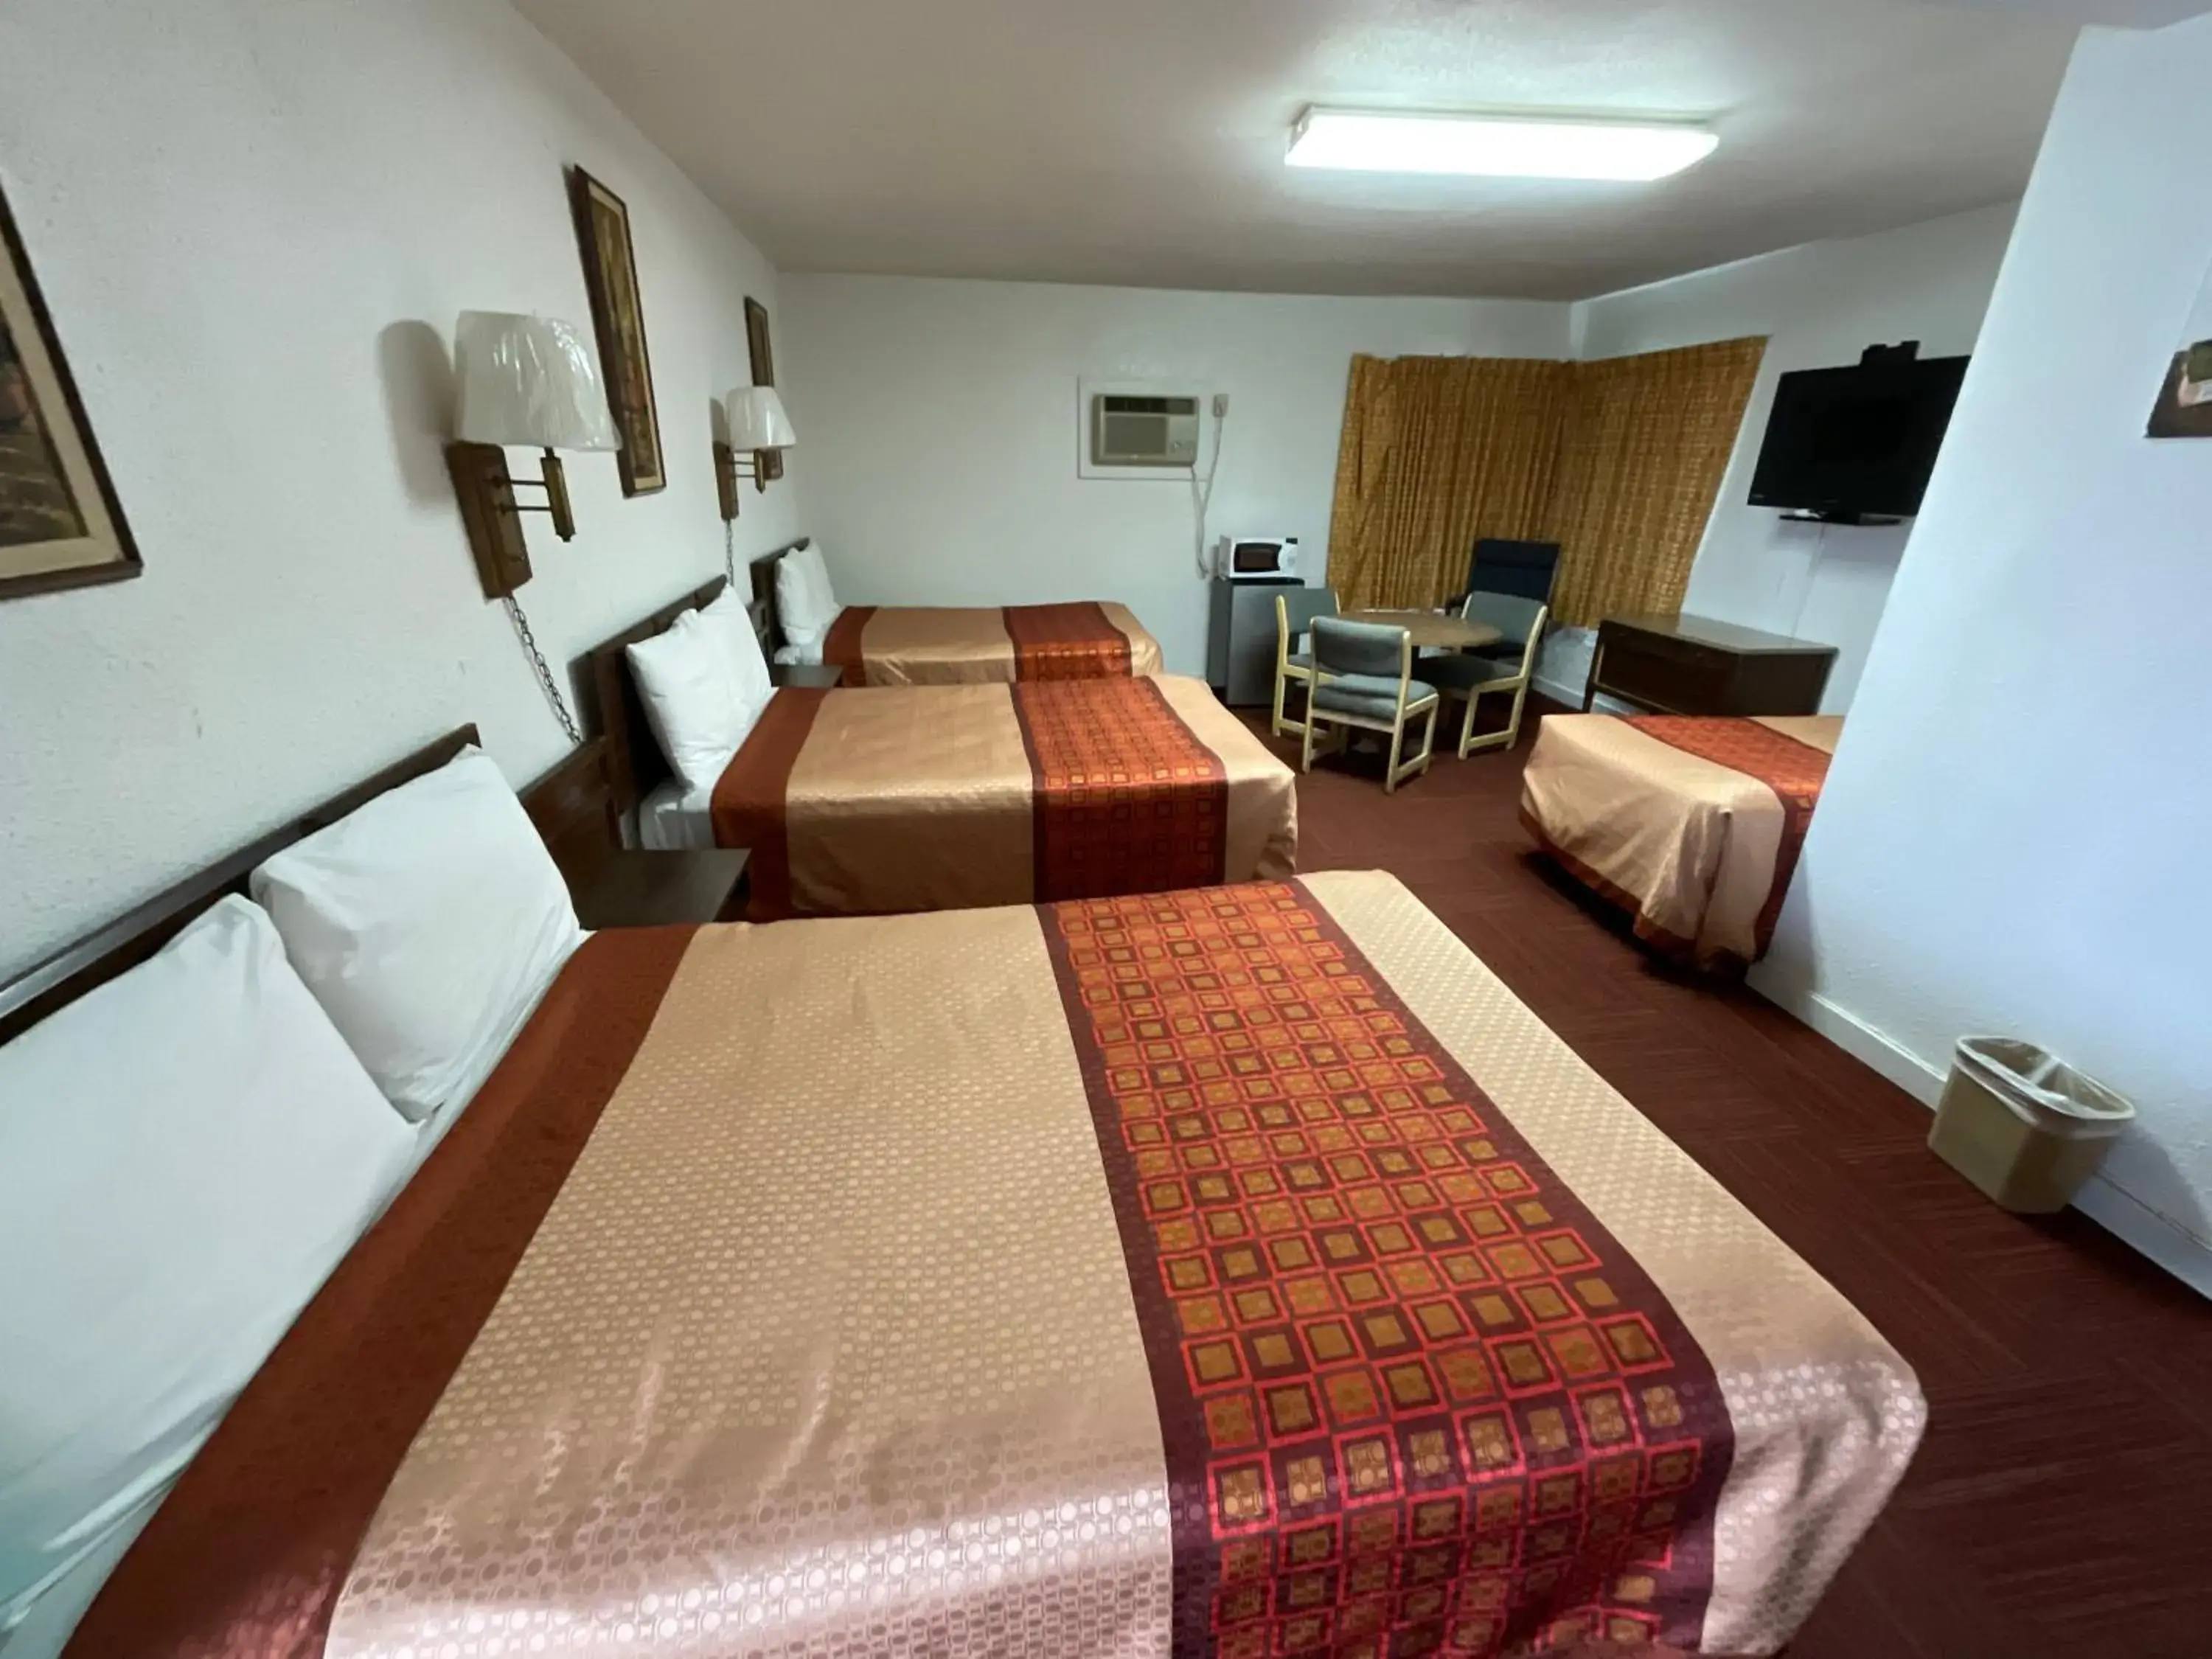 Bed in Kansan Motel